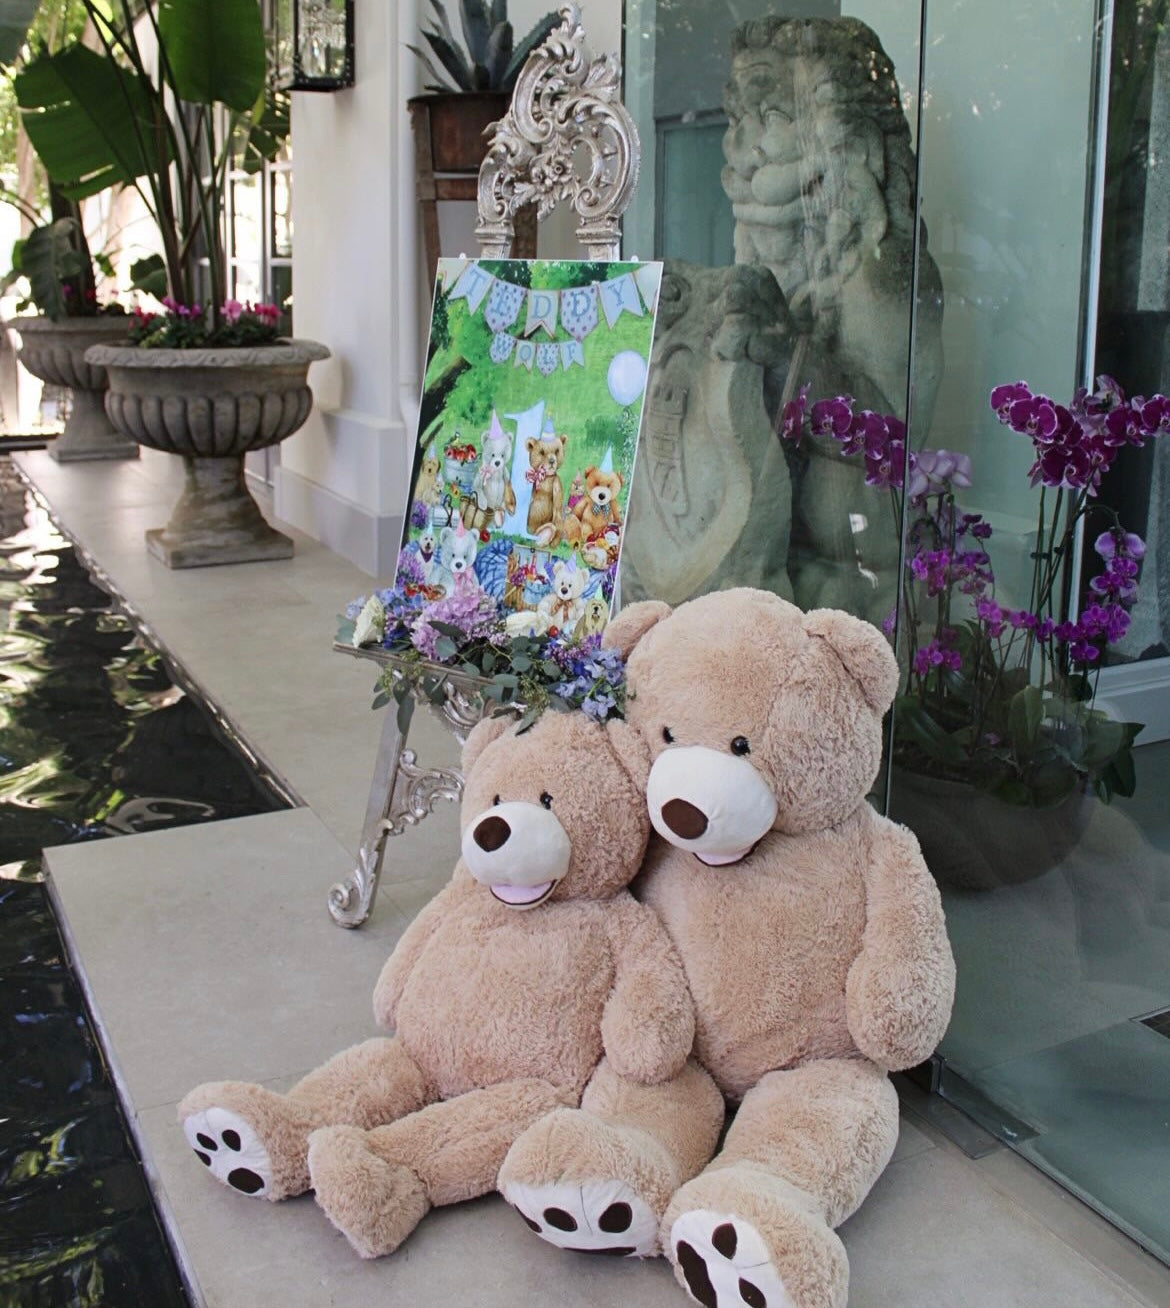 Teddy Bear welcome sign